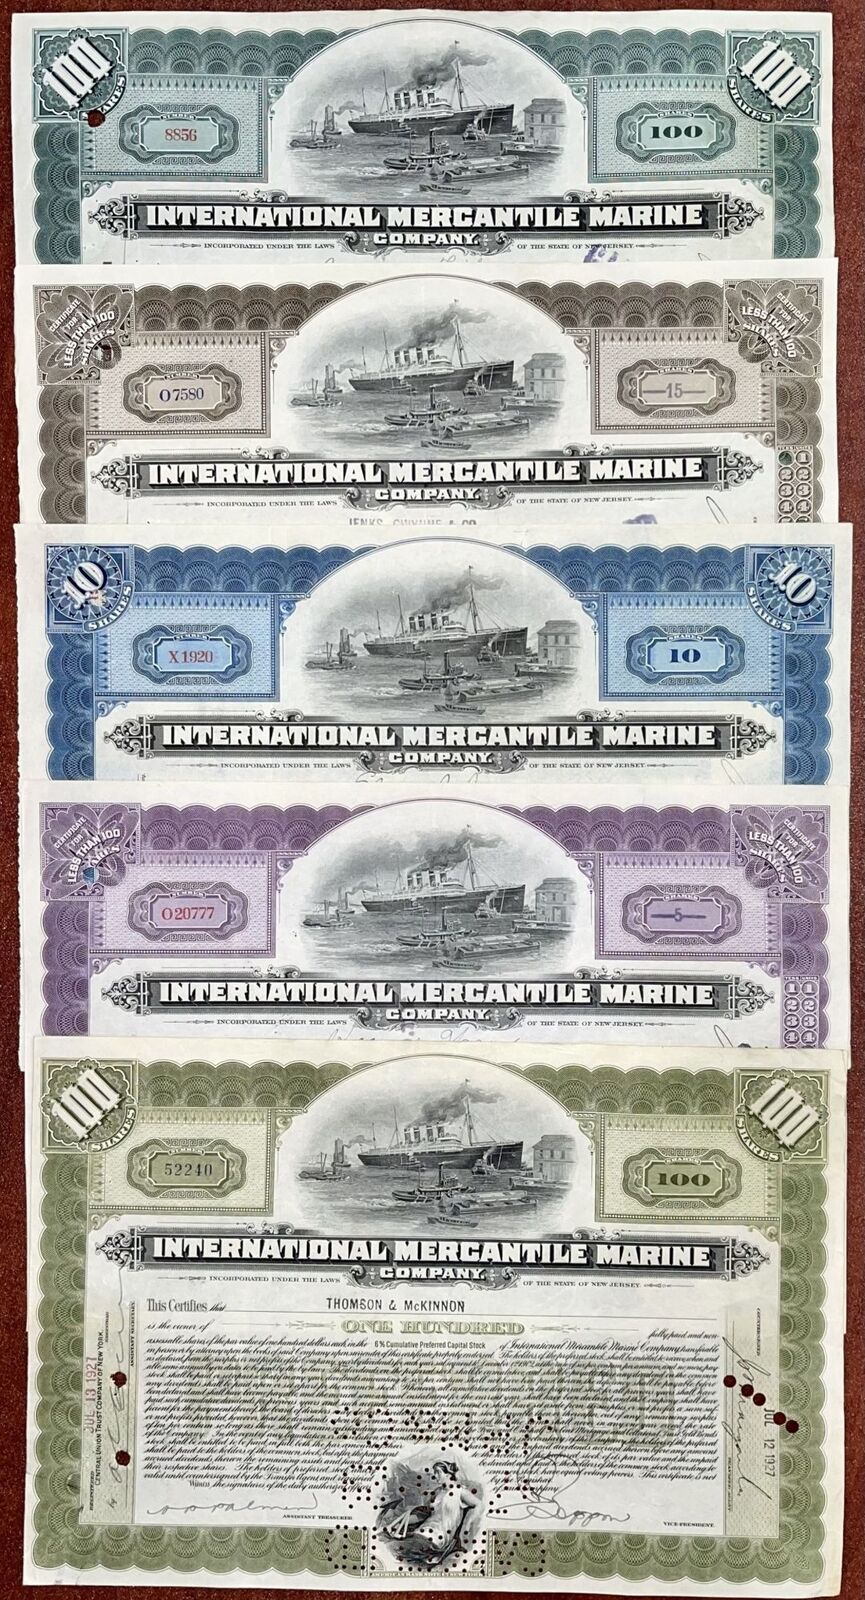 Titanic Group of 5 International Mercantile Marine Stock Certificates - Co. that